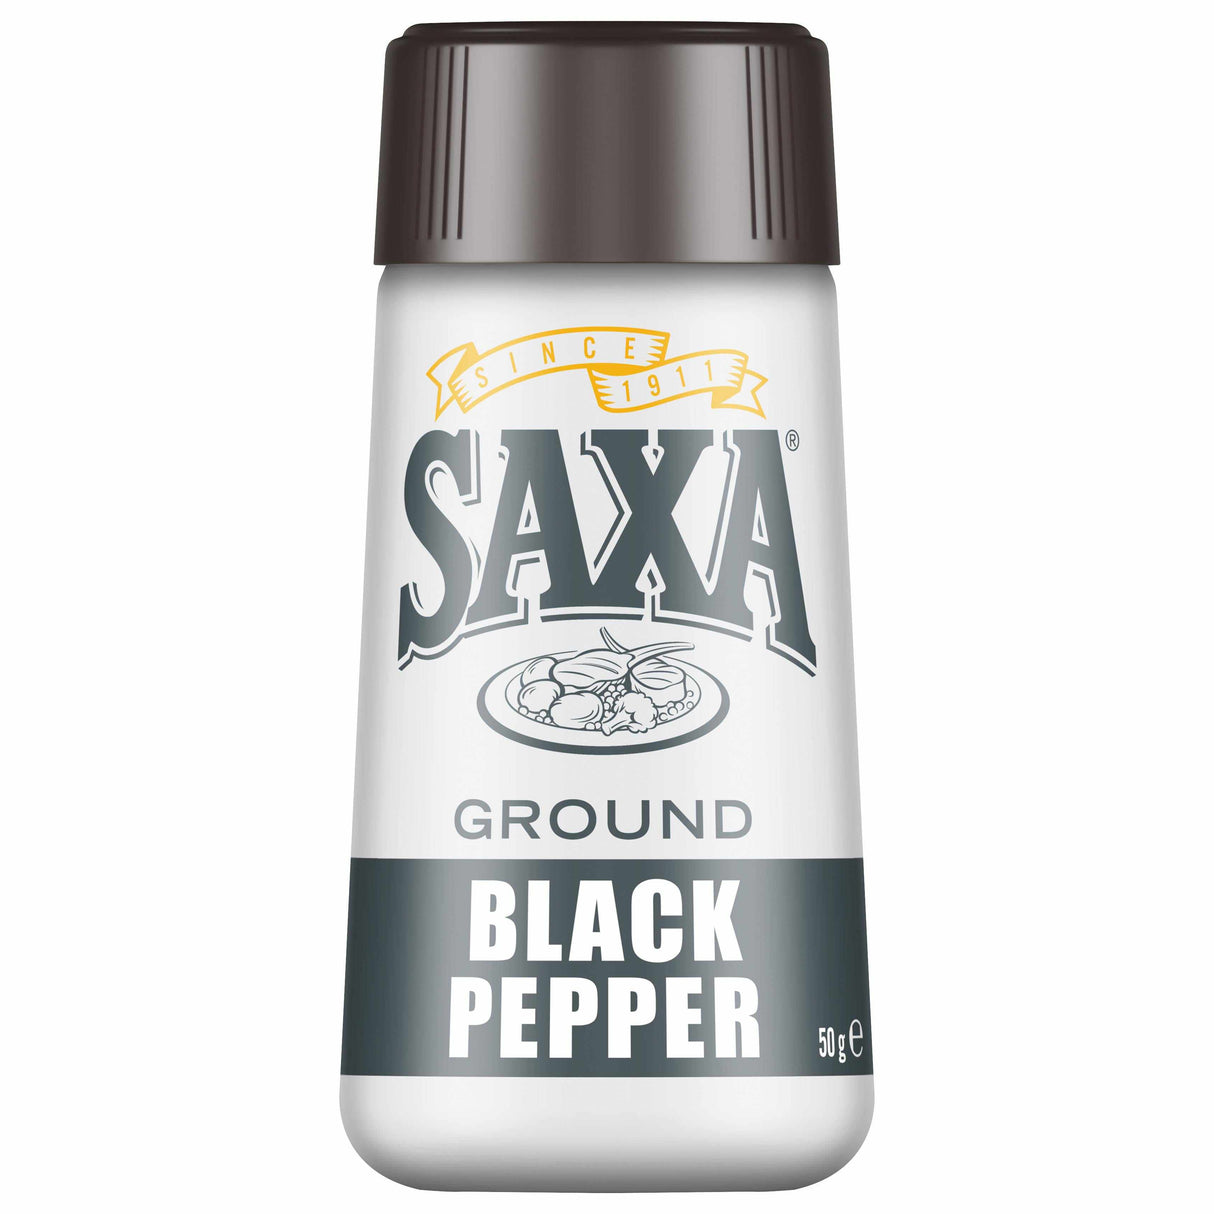 Saxa Ground Black Pepper 50g